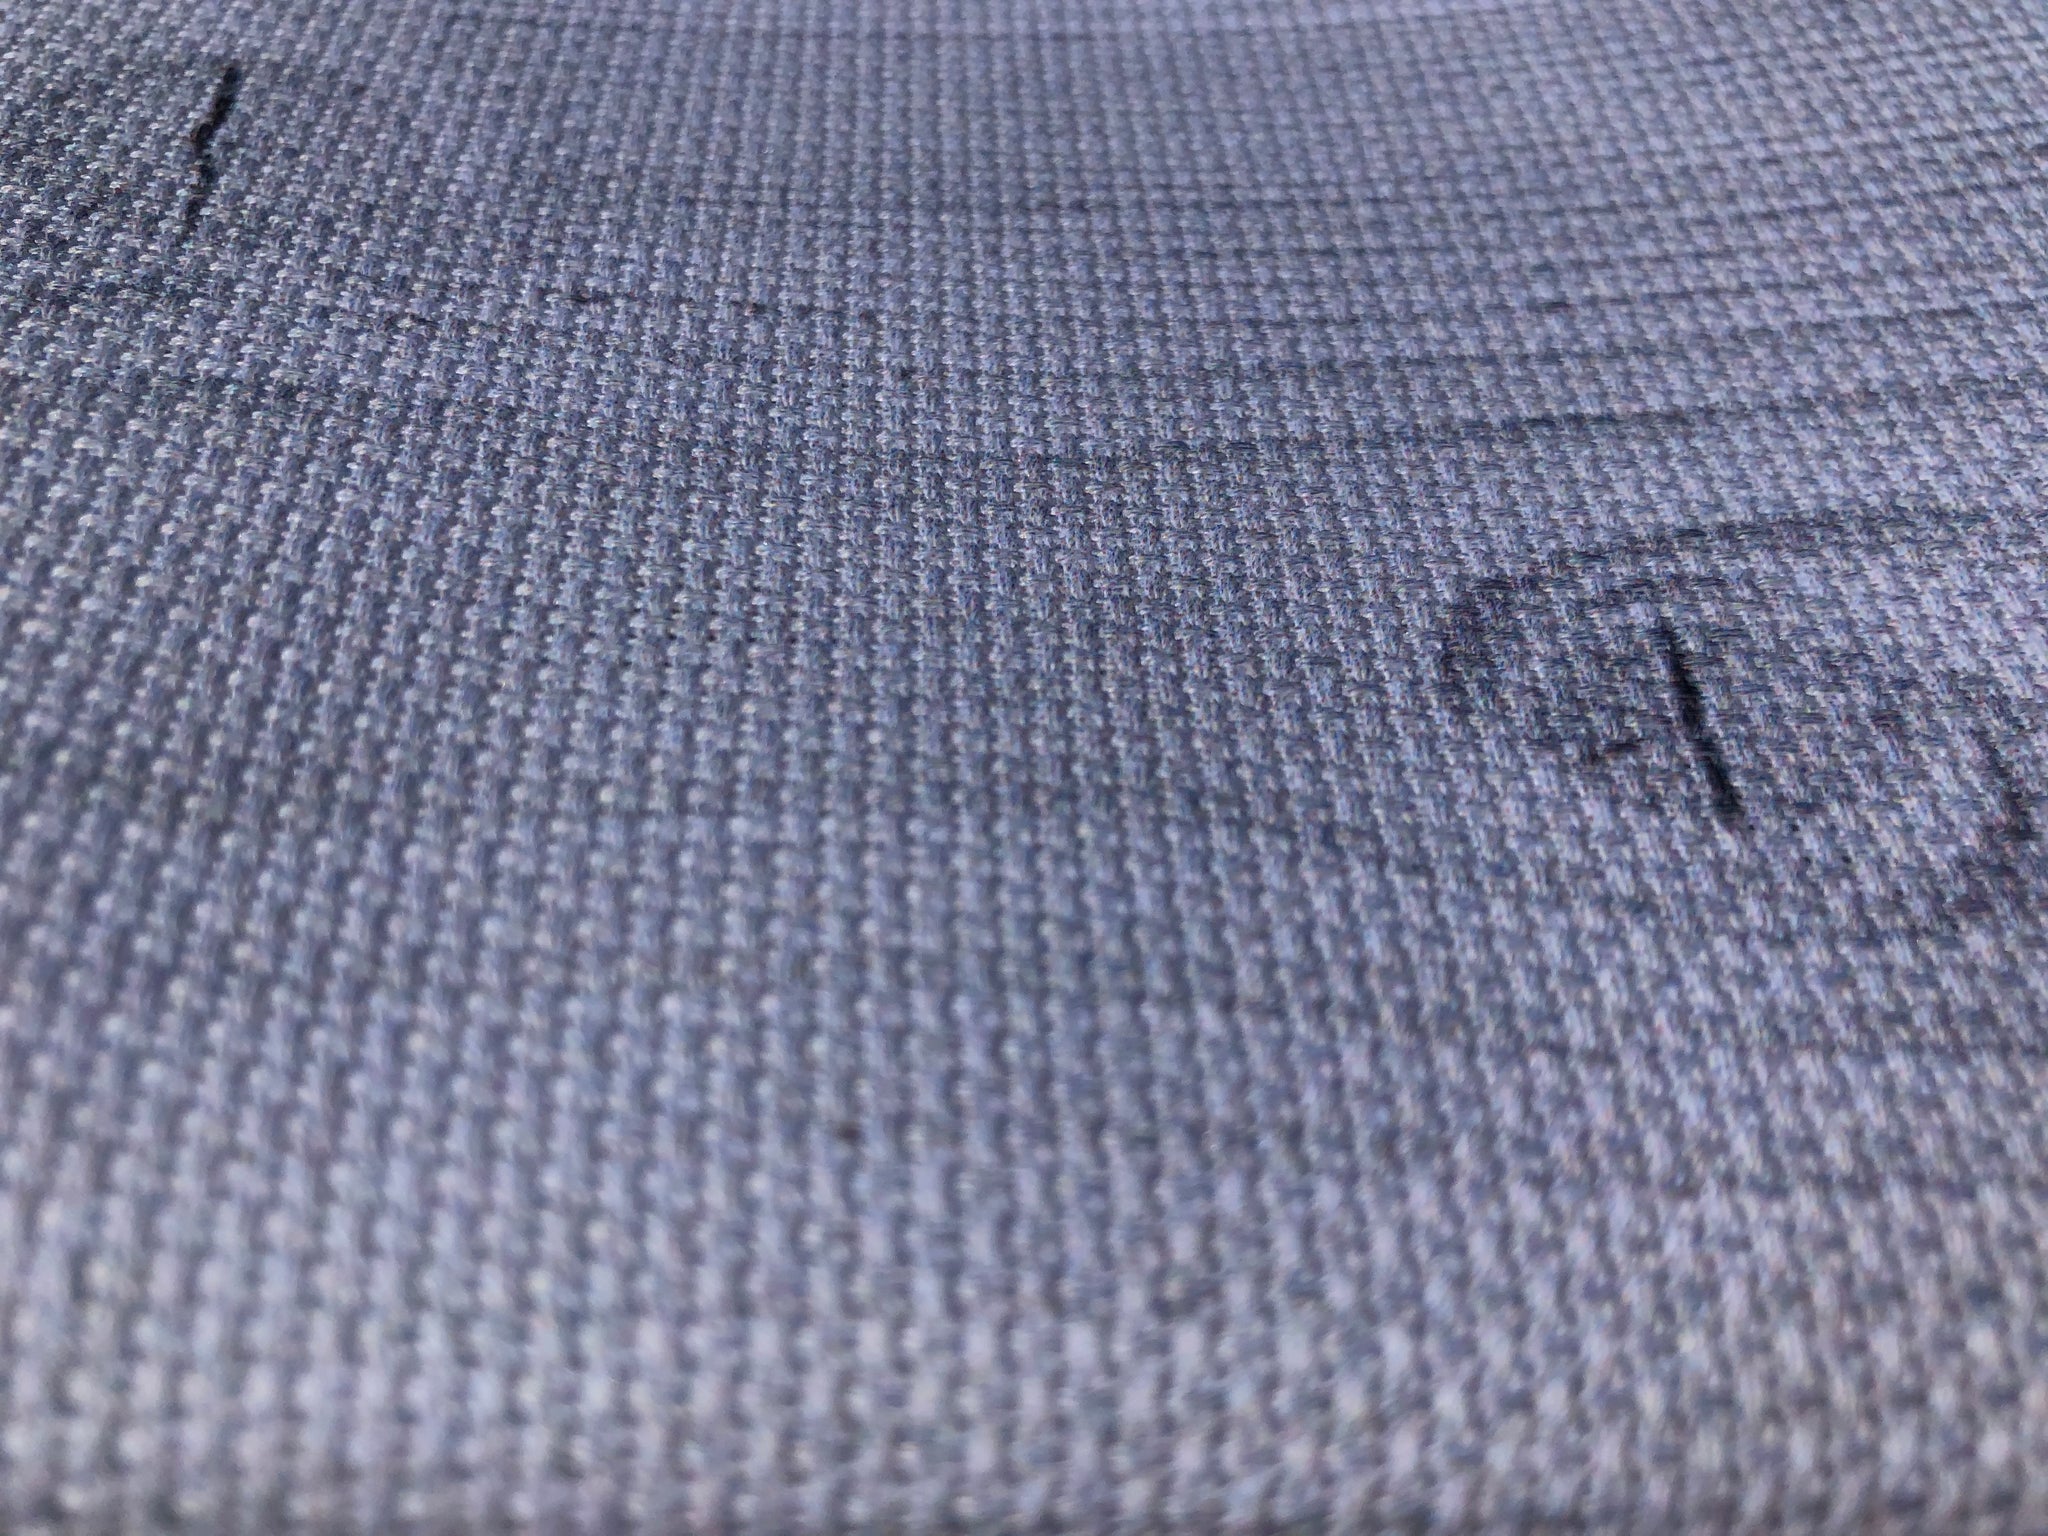 Cross Stitch Cloth - Fabric Flair 16 Count Aida - Hazy Gray 18 x